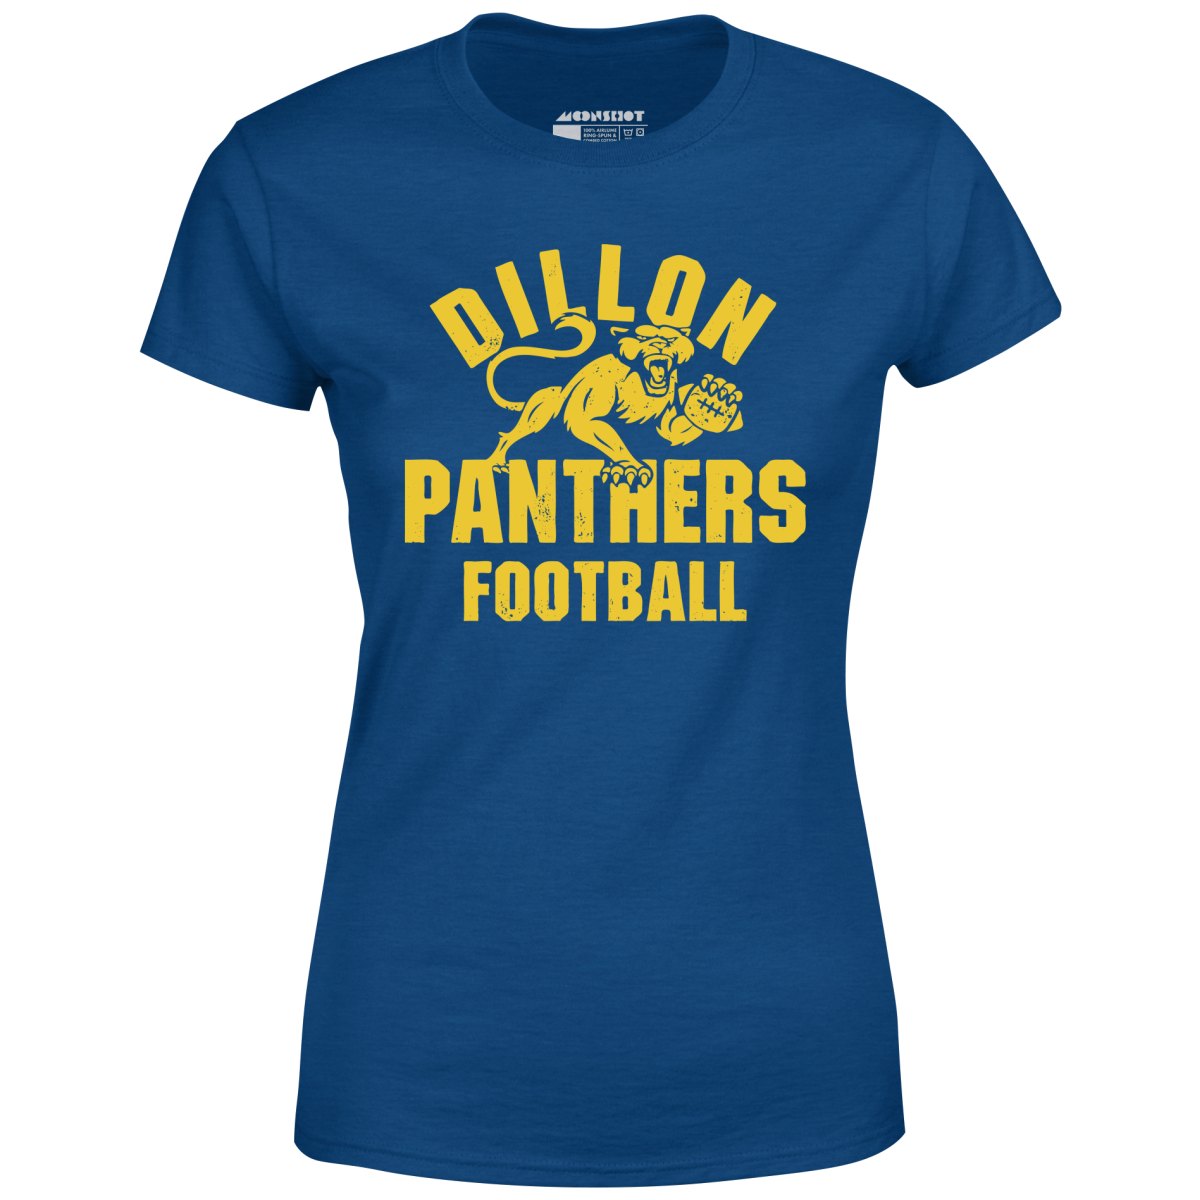 Dillon Panthers Football - Women's T-Shirt